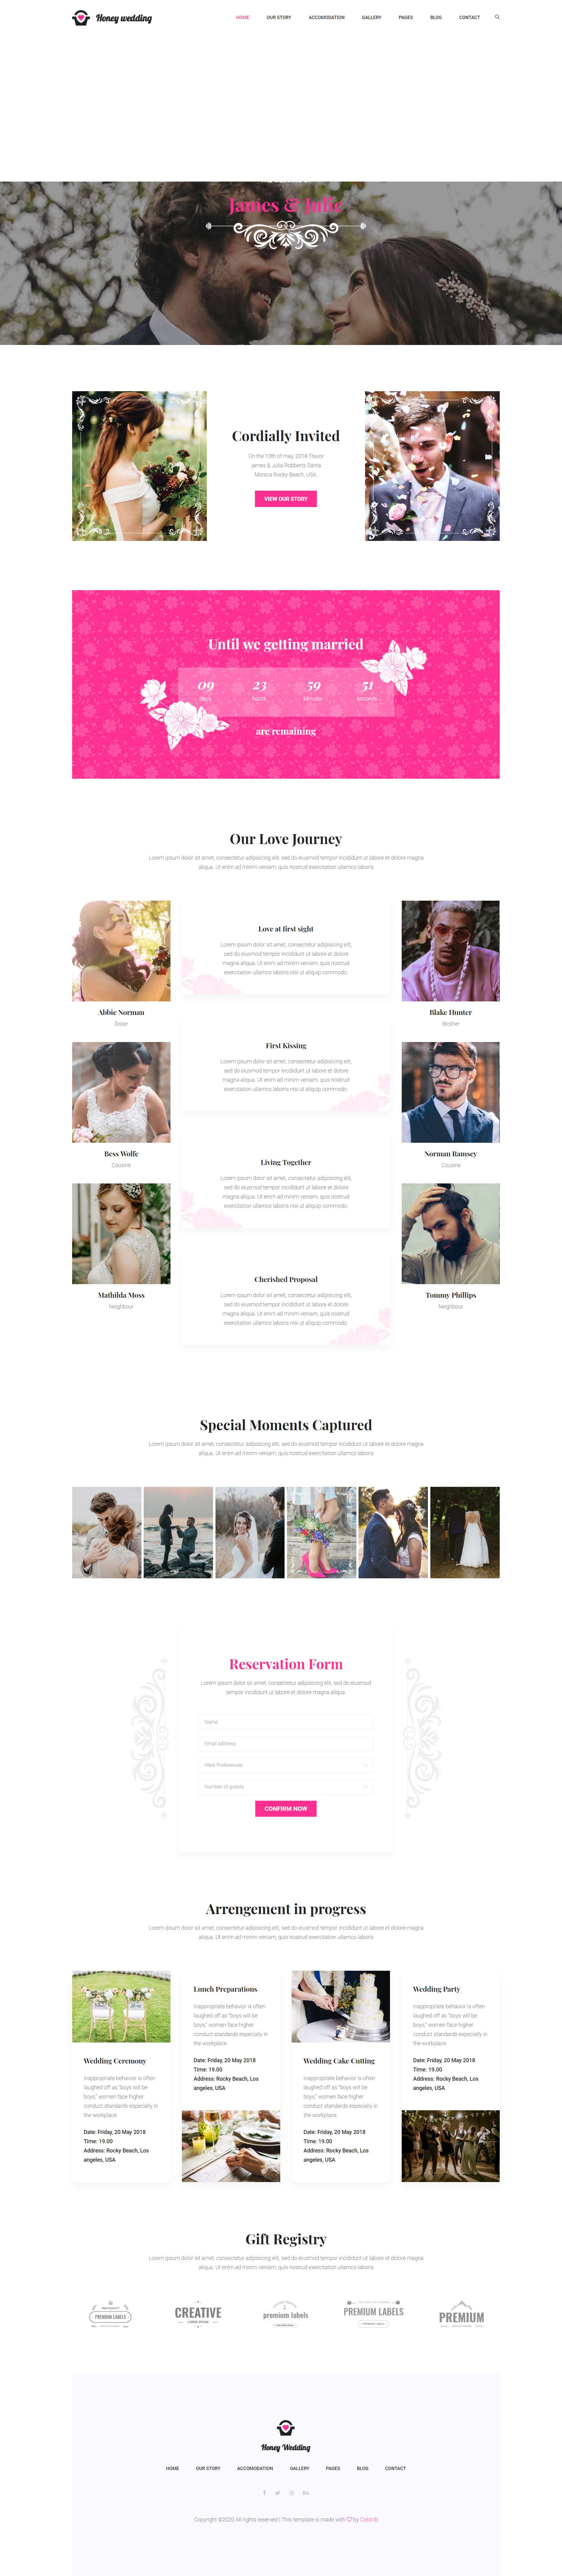 HTML5红色简洁样式甜蜜婚礼活动网页模板代码下载